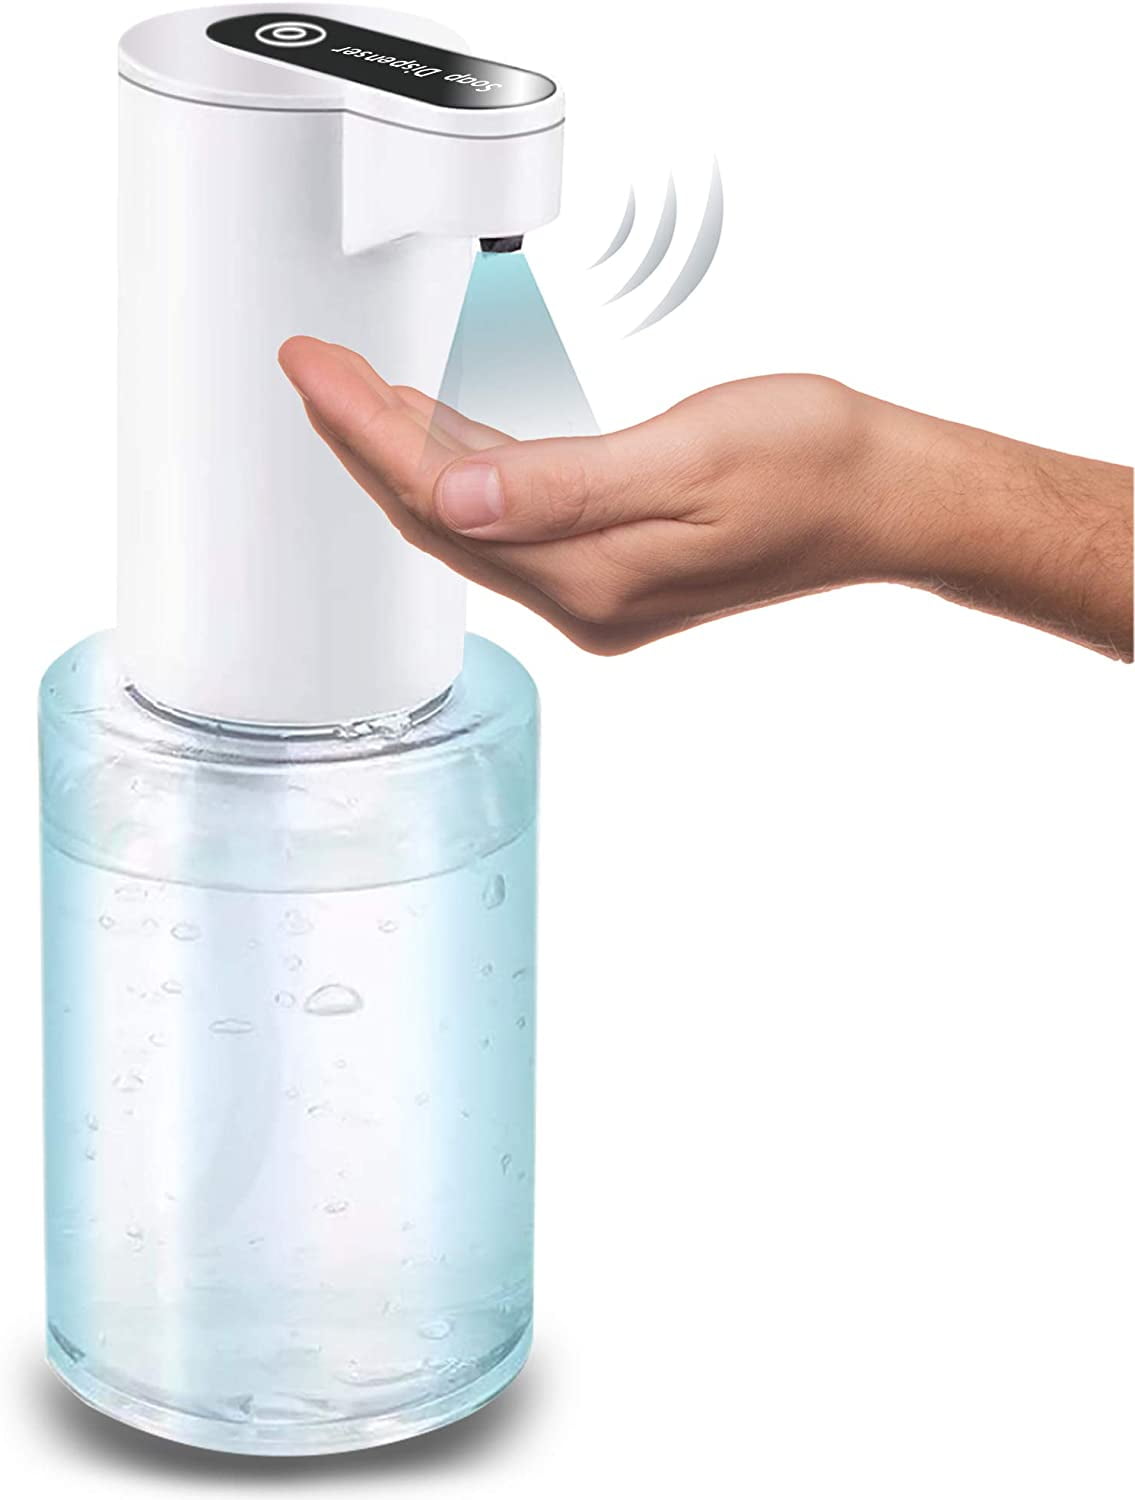 2021 New Version】 Automatic Sanitizer Gel Dispenser,Automatic Hand  Sanitizer Dispenser,Touchless soap Dispenser 12 OZ (350 ml),Suitable for Hand  Gel Entrance,CAR,Cafe,Home - 4 Battery [NOT Included] - Walmart.com